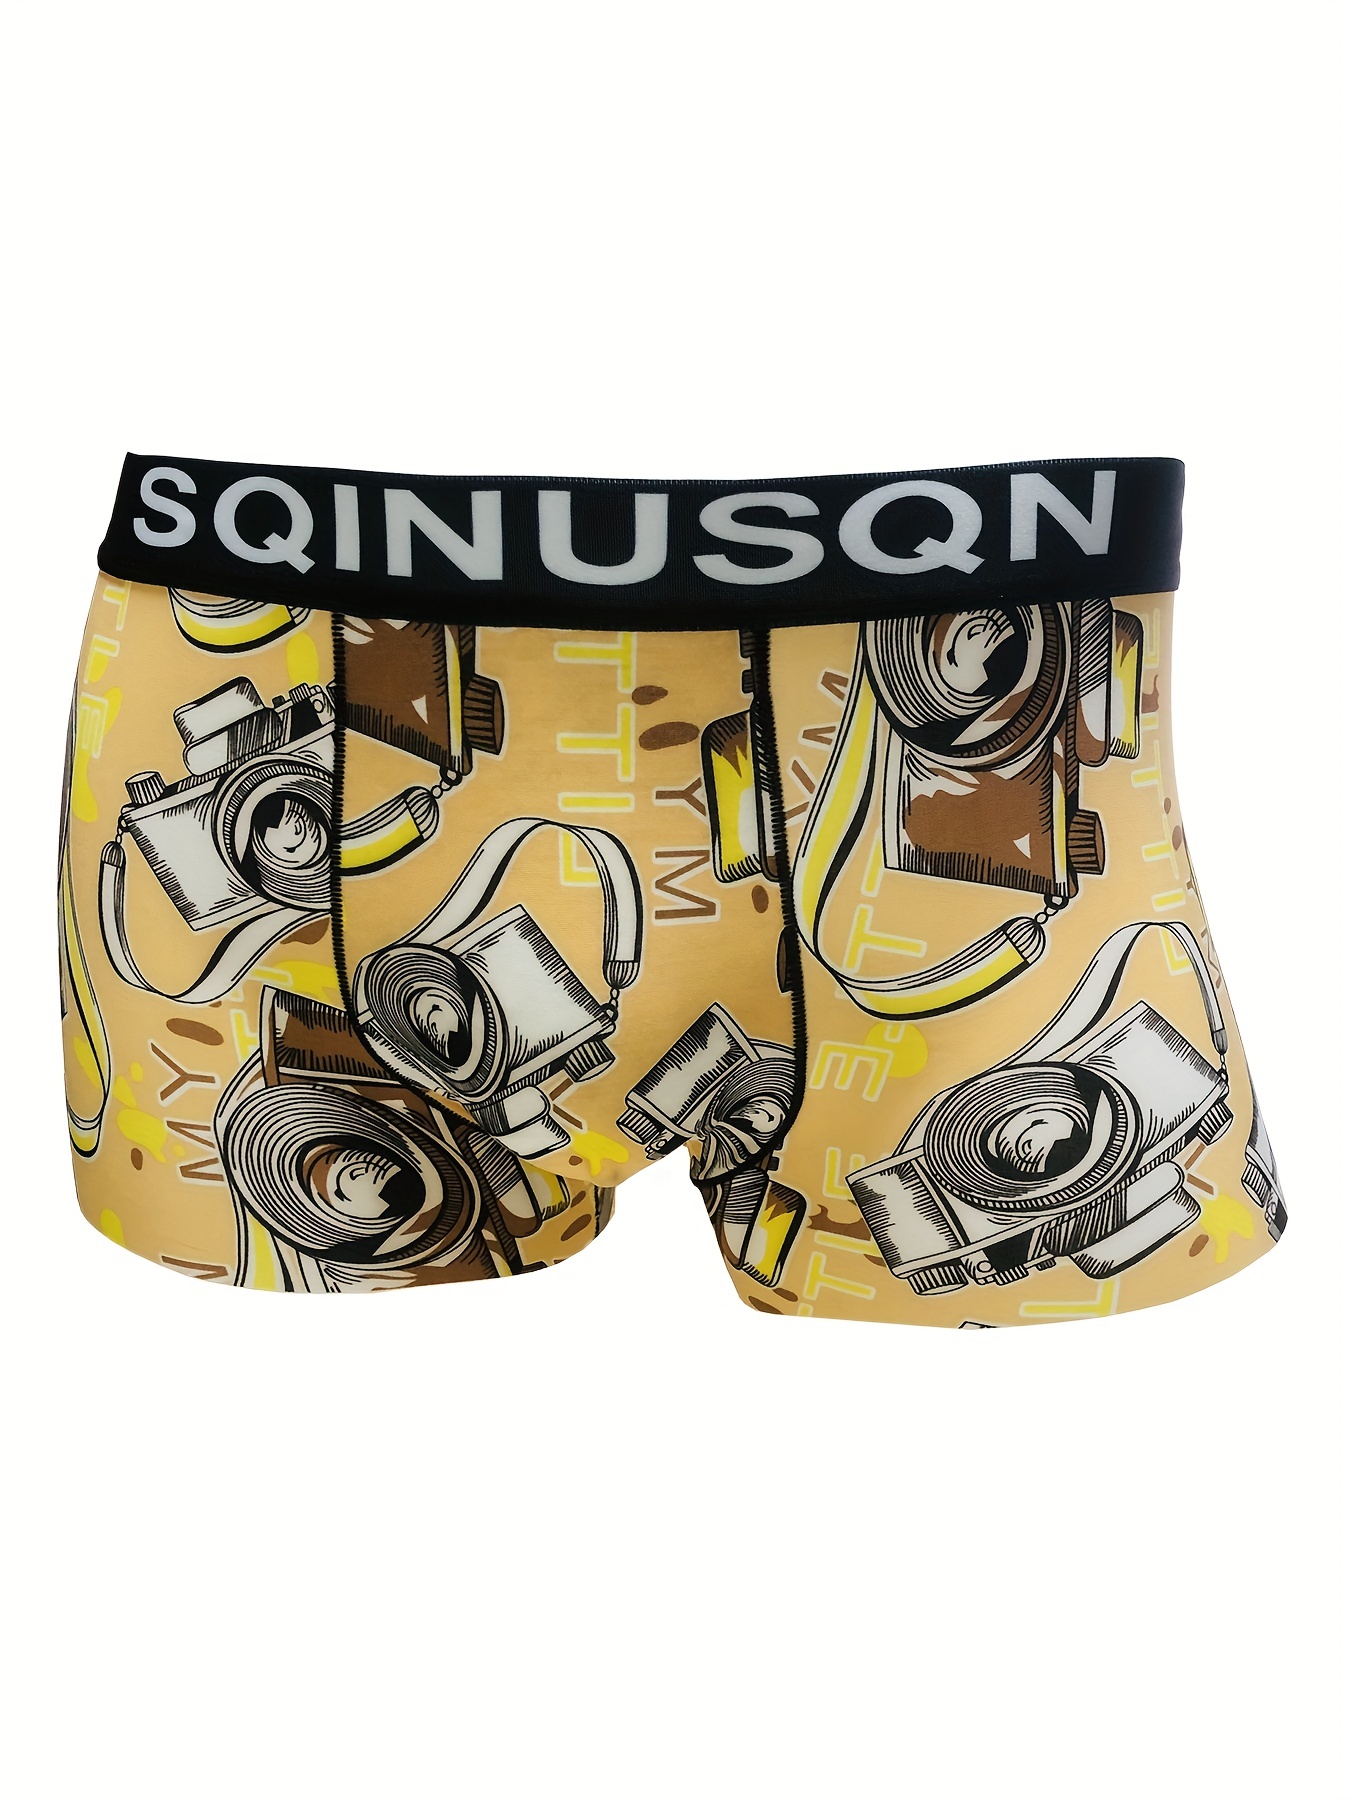 Funny Lingerie Men Boxer, Boxer Shorts Underwear Funny